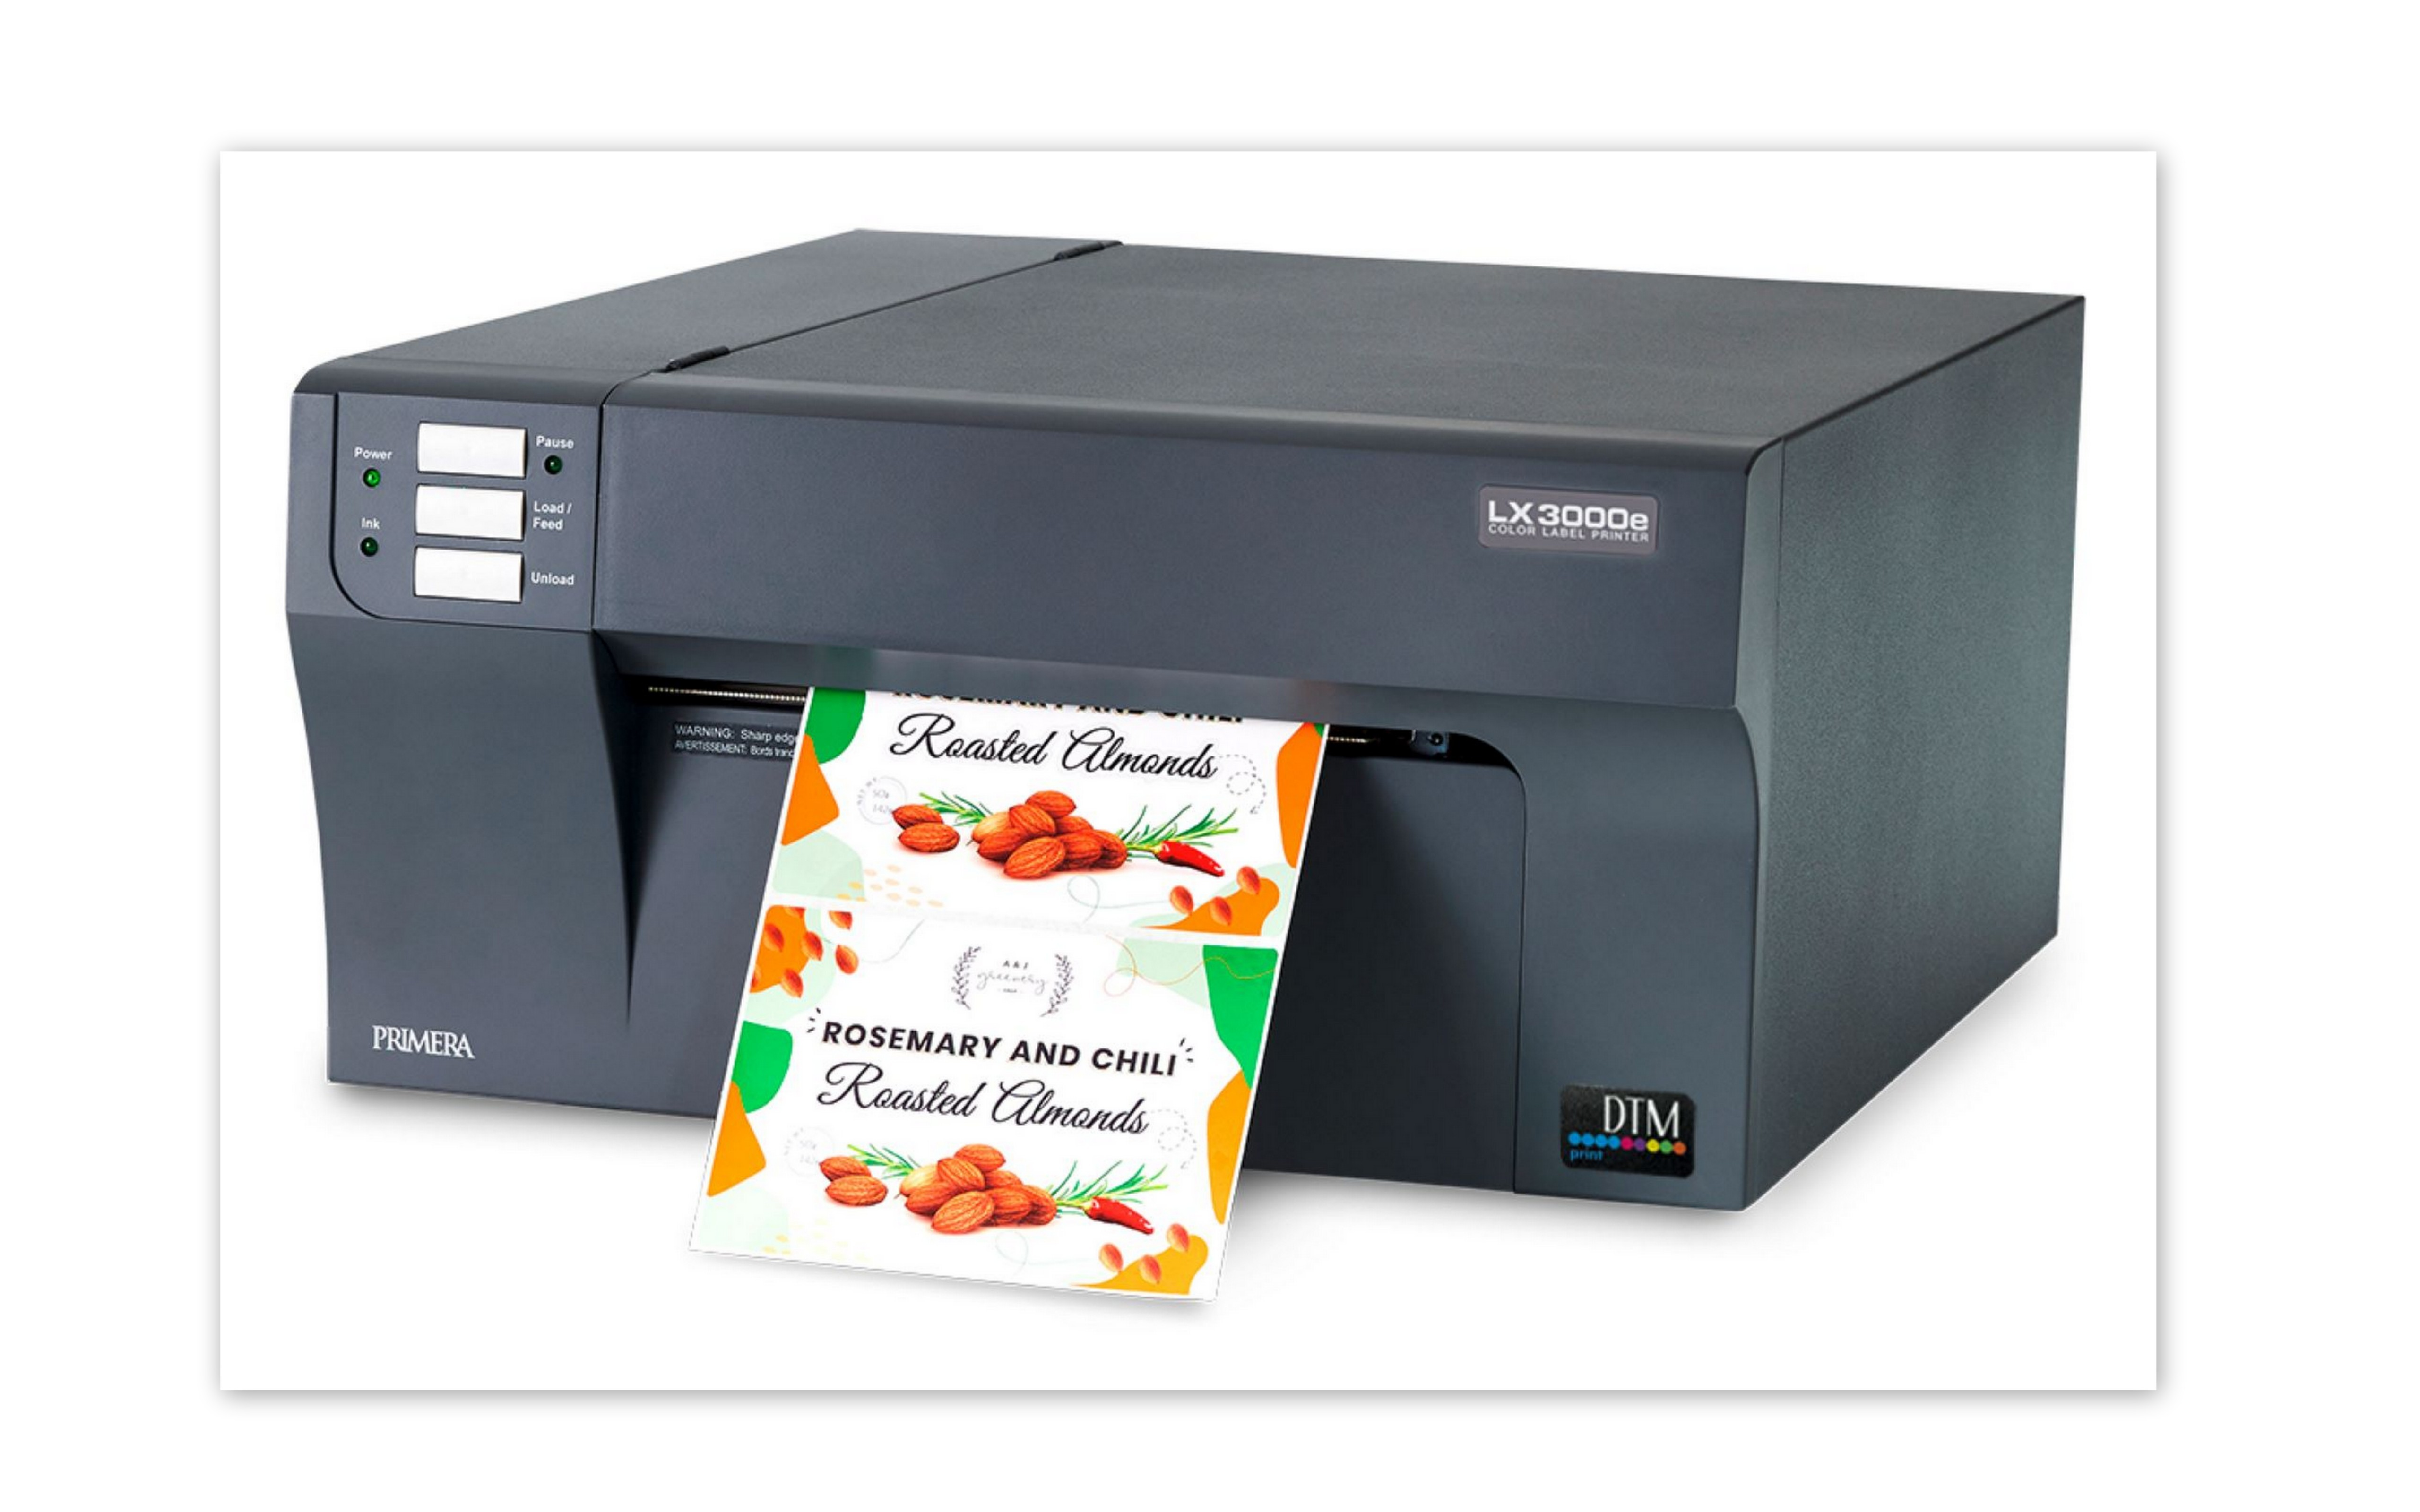 DTM PRINT LX3000e Color mit drei Printer Inkjet Label Label Printer Pigment separaten Tintentanks(CMY) Pigment-basierte Vollfarb-Drucktechnologie WLAN Netzwerkfähig